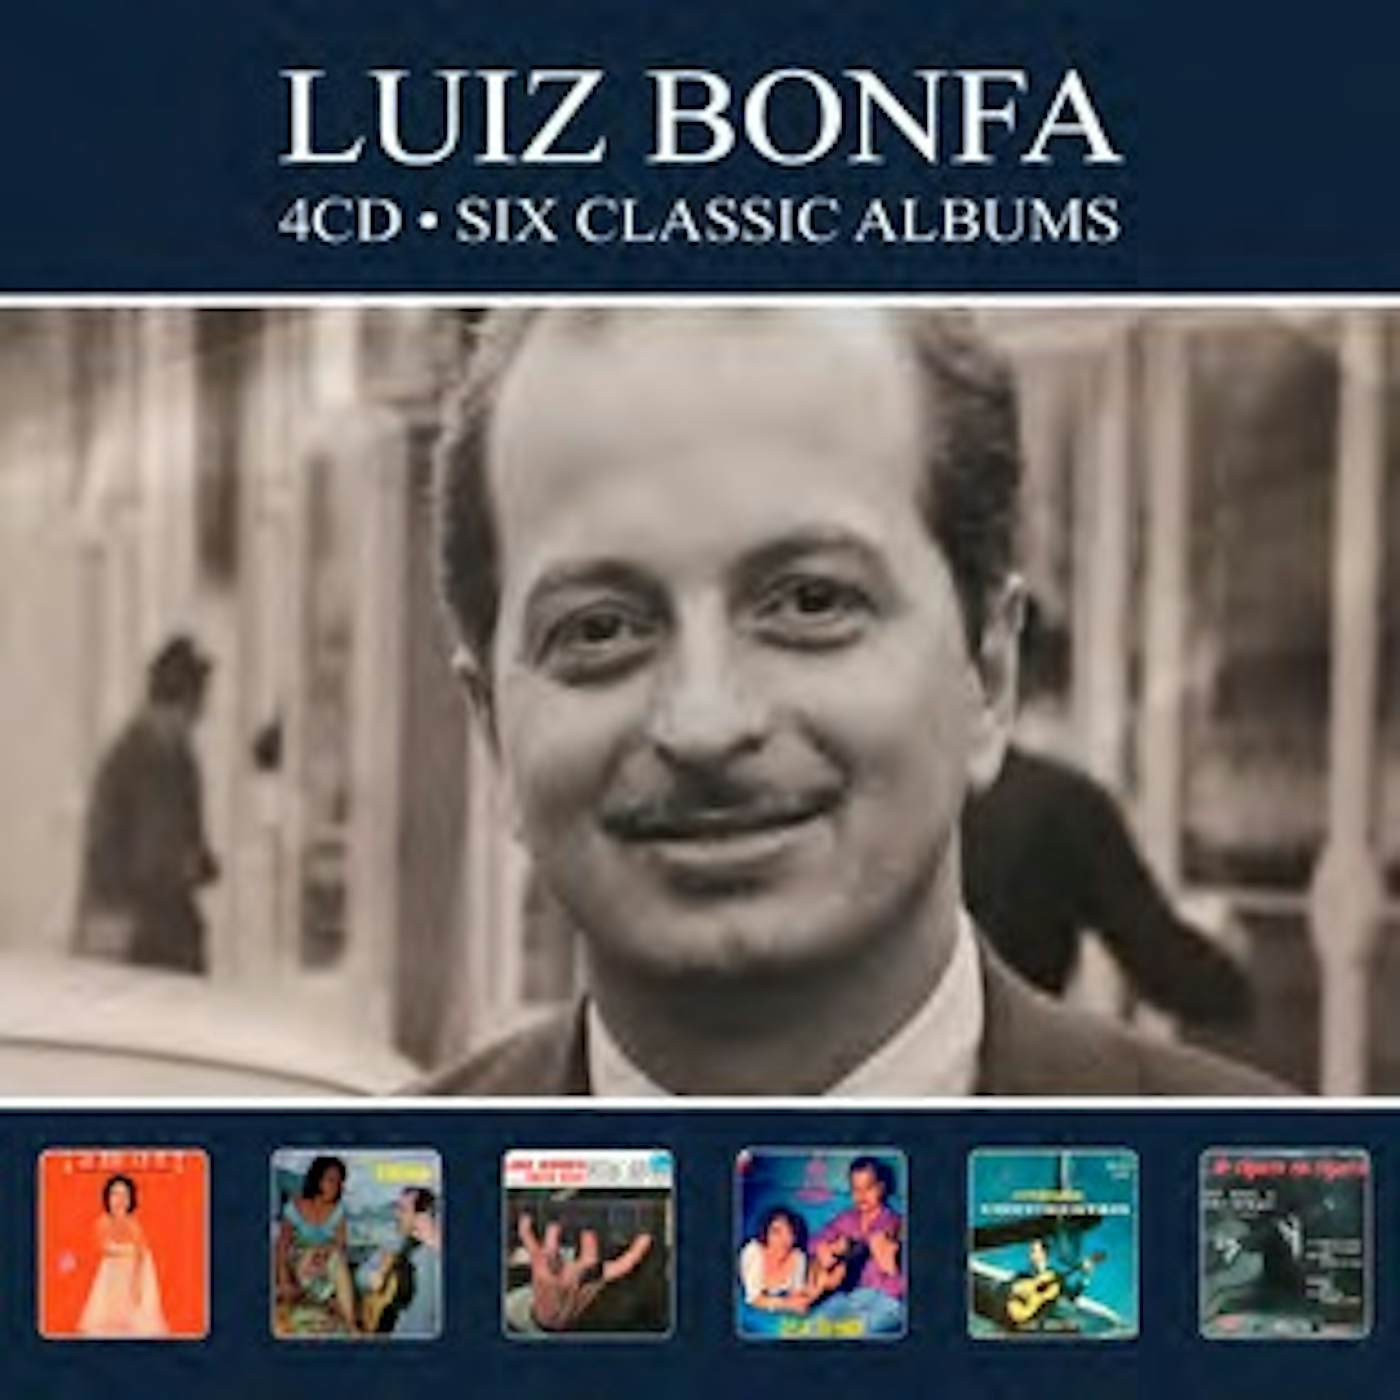 Luiz Bonfá 6 CLASSIC ALBUMS CD